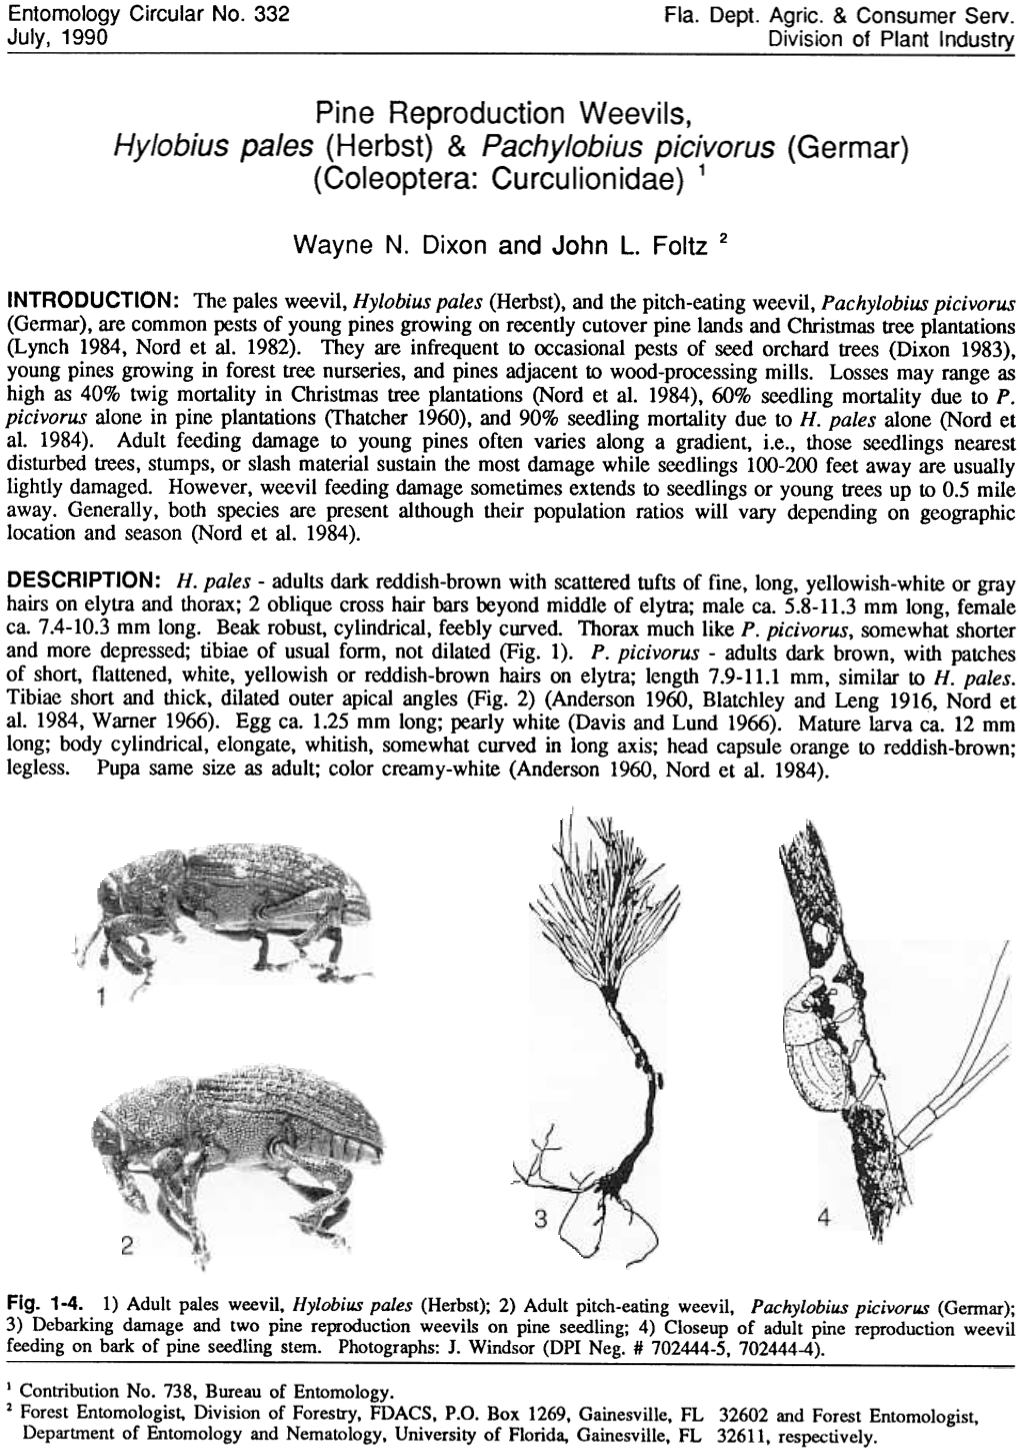 Pine Reproduction Weevils, Hylobius Pales (Herbst) & Pachylobius Picivorus (Germar) (Coleoptera: Curculionidae) 1